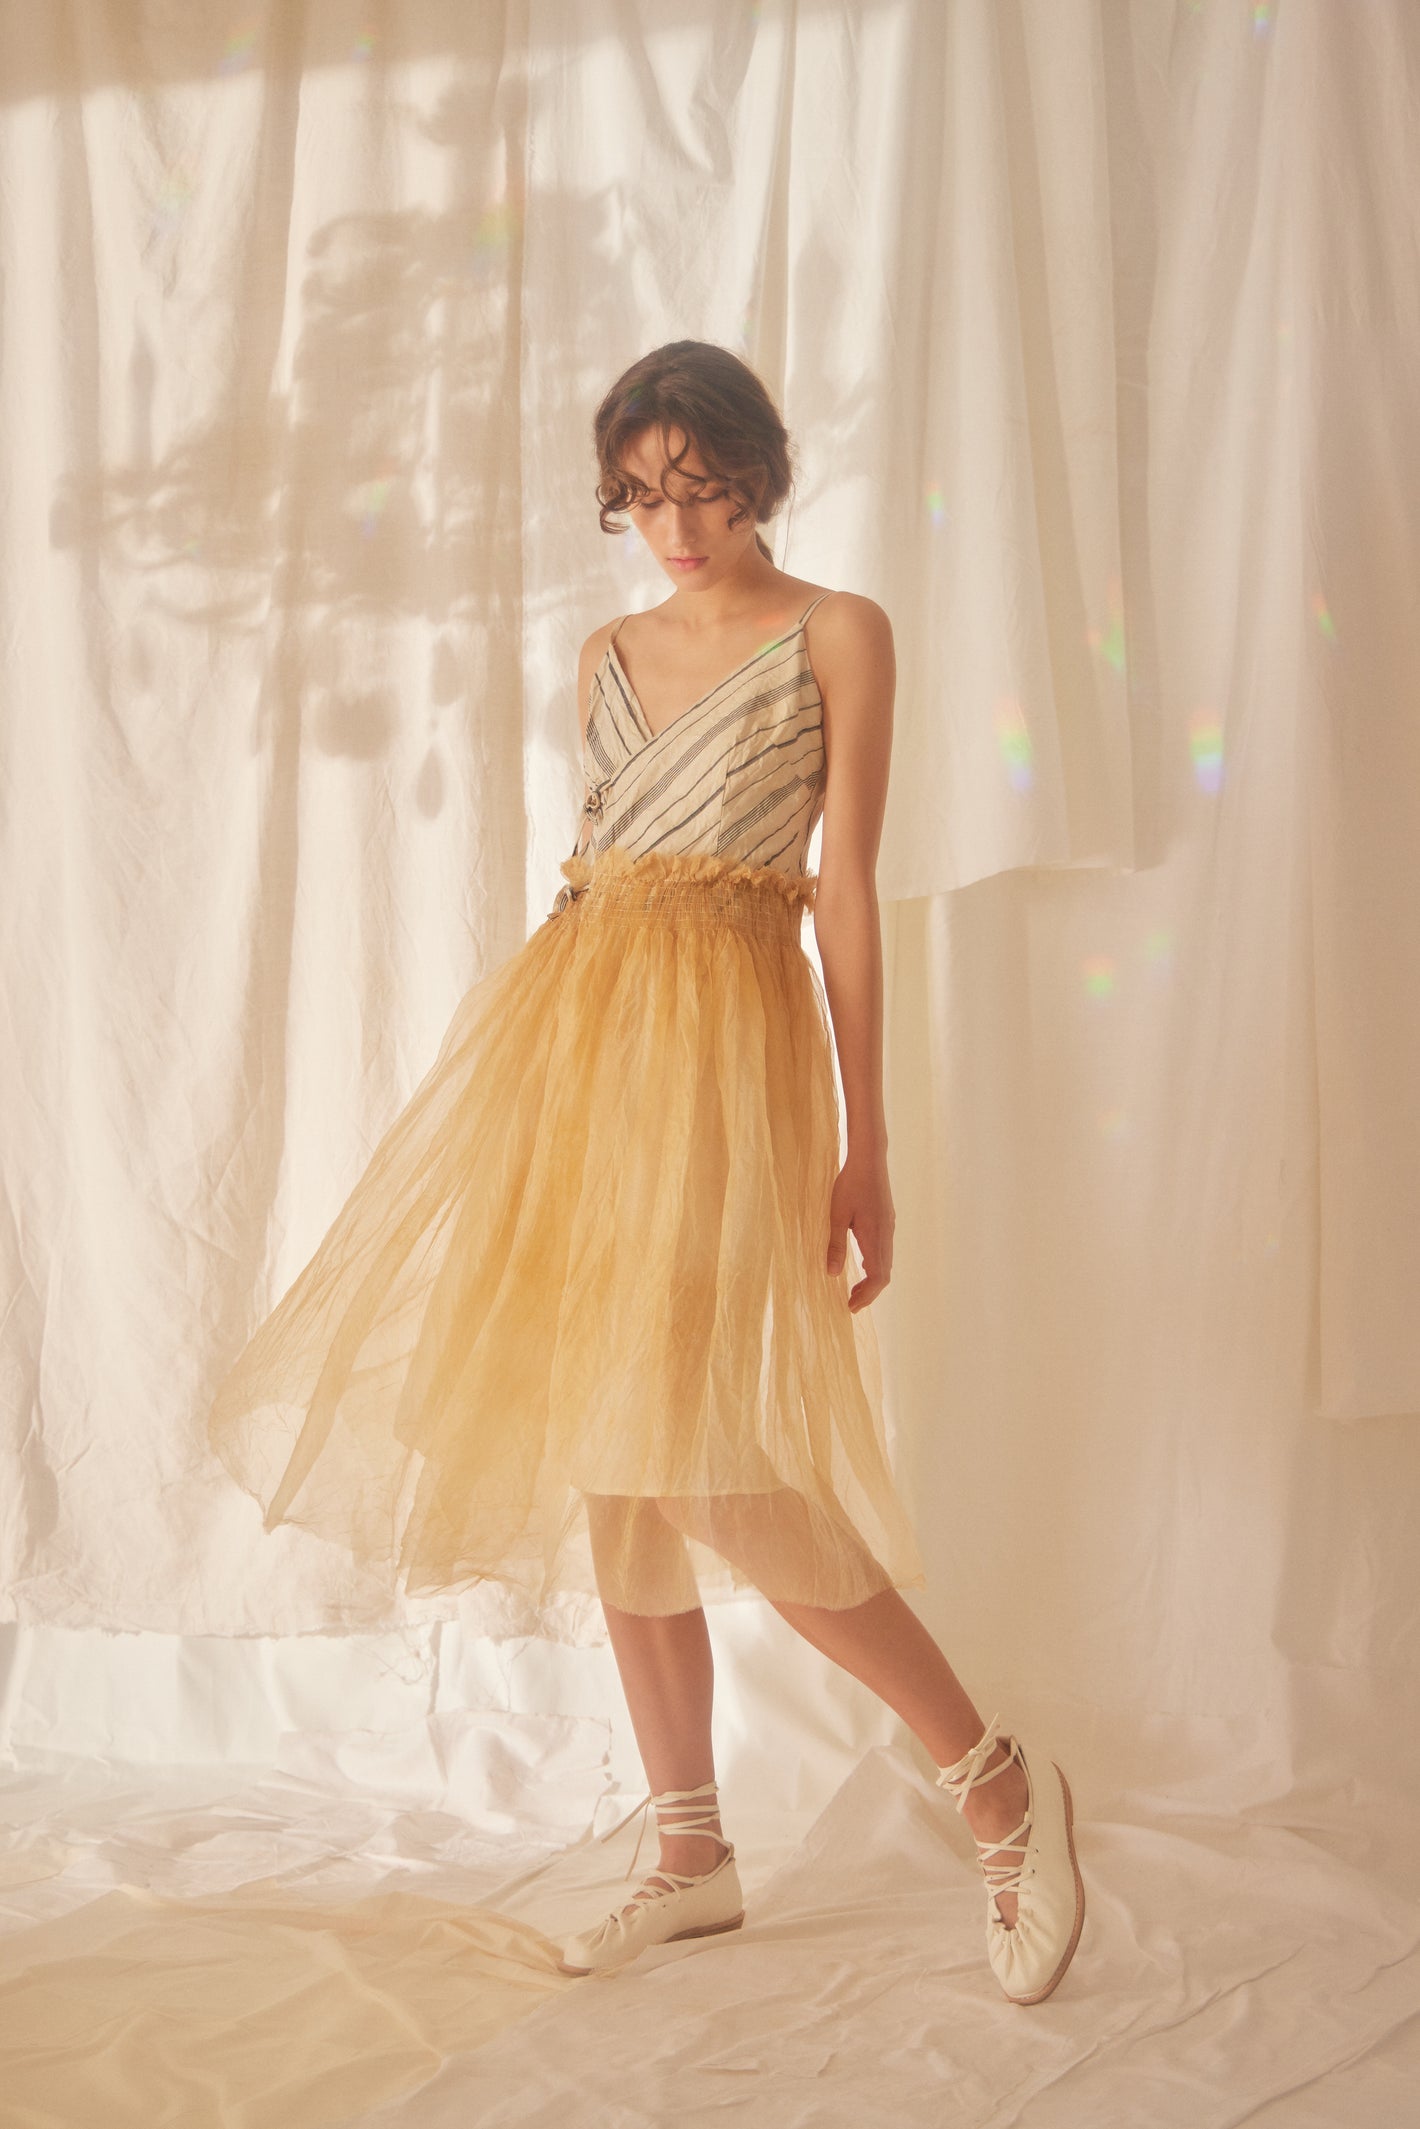 A Tentative Atelier SS22 Lookbook srtiped top and ballerina tutu skirt midi dress